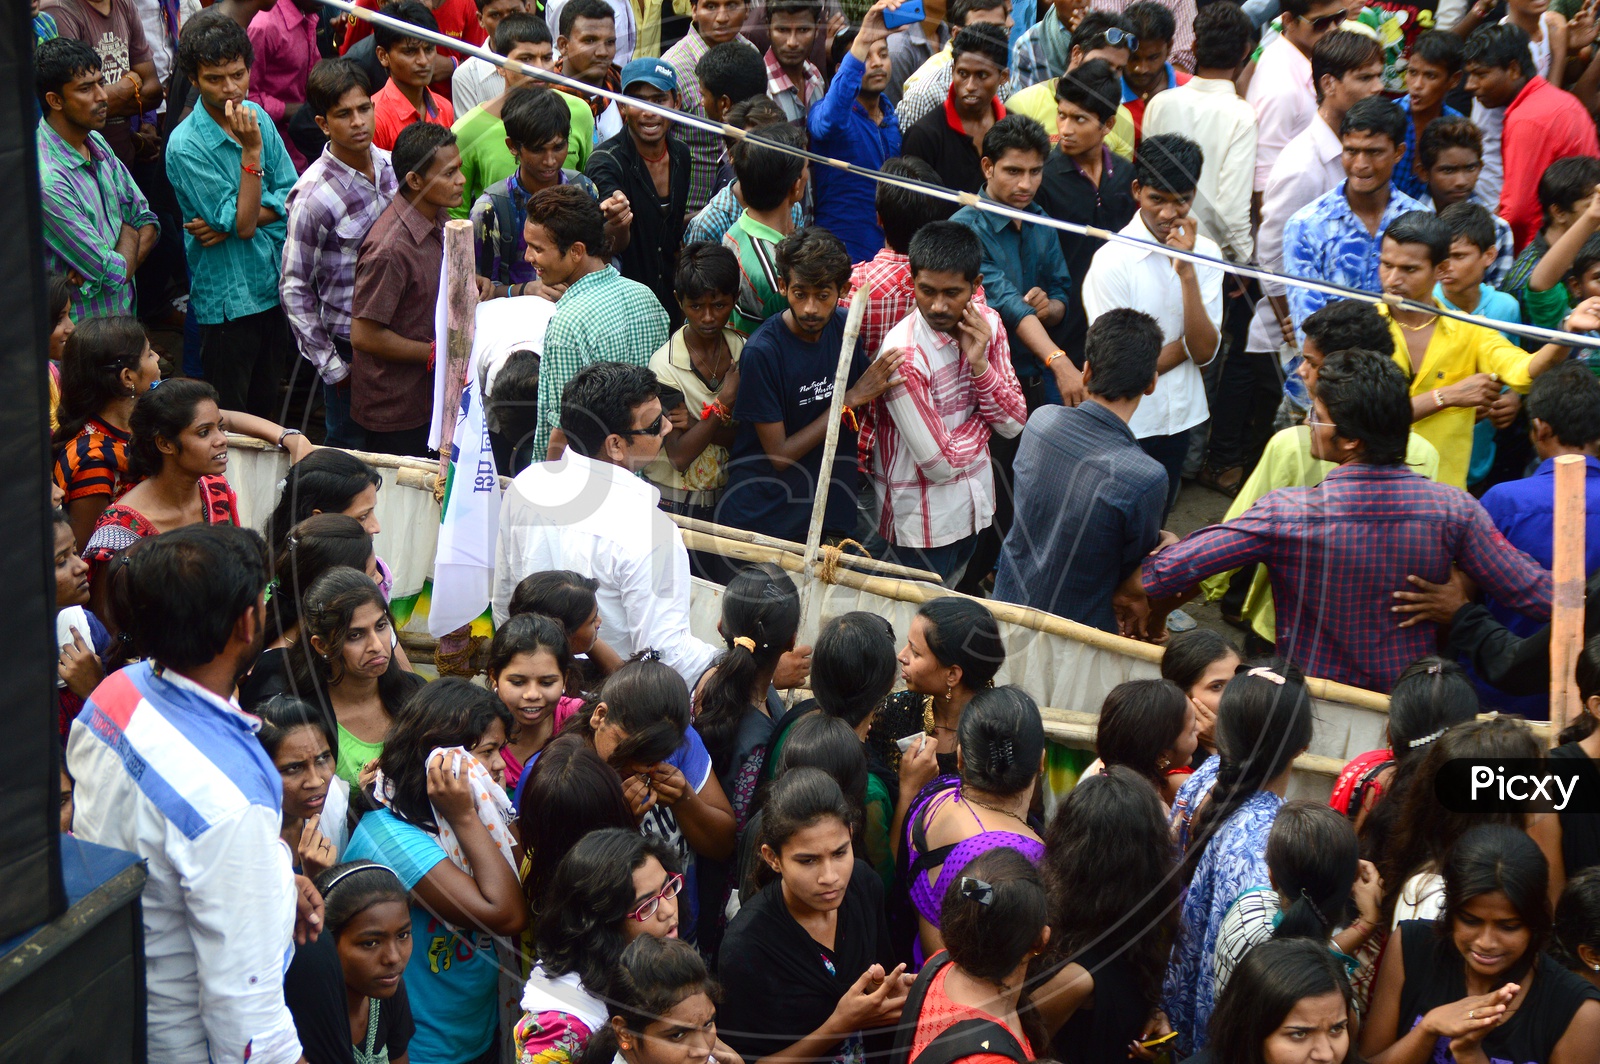 People at Dahi handi festival in Amravati